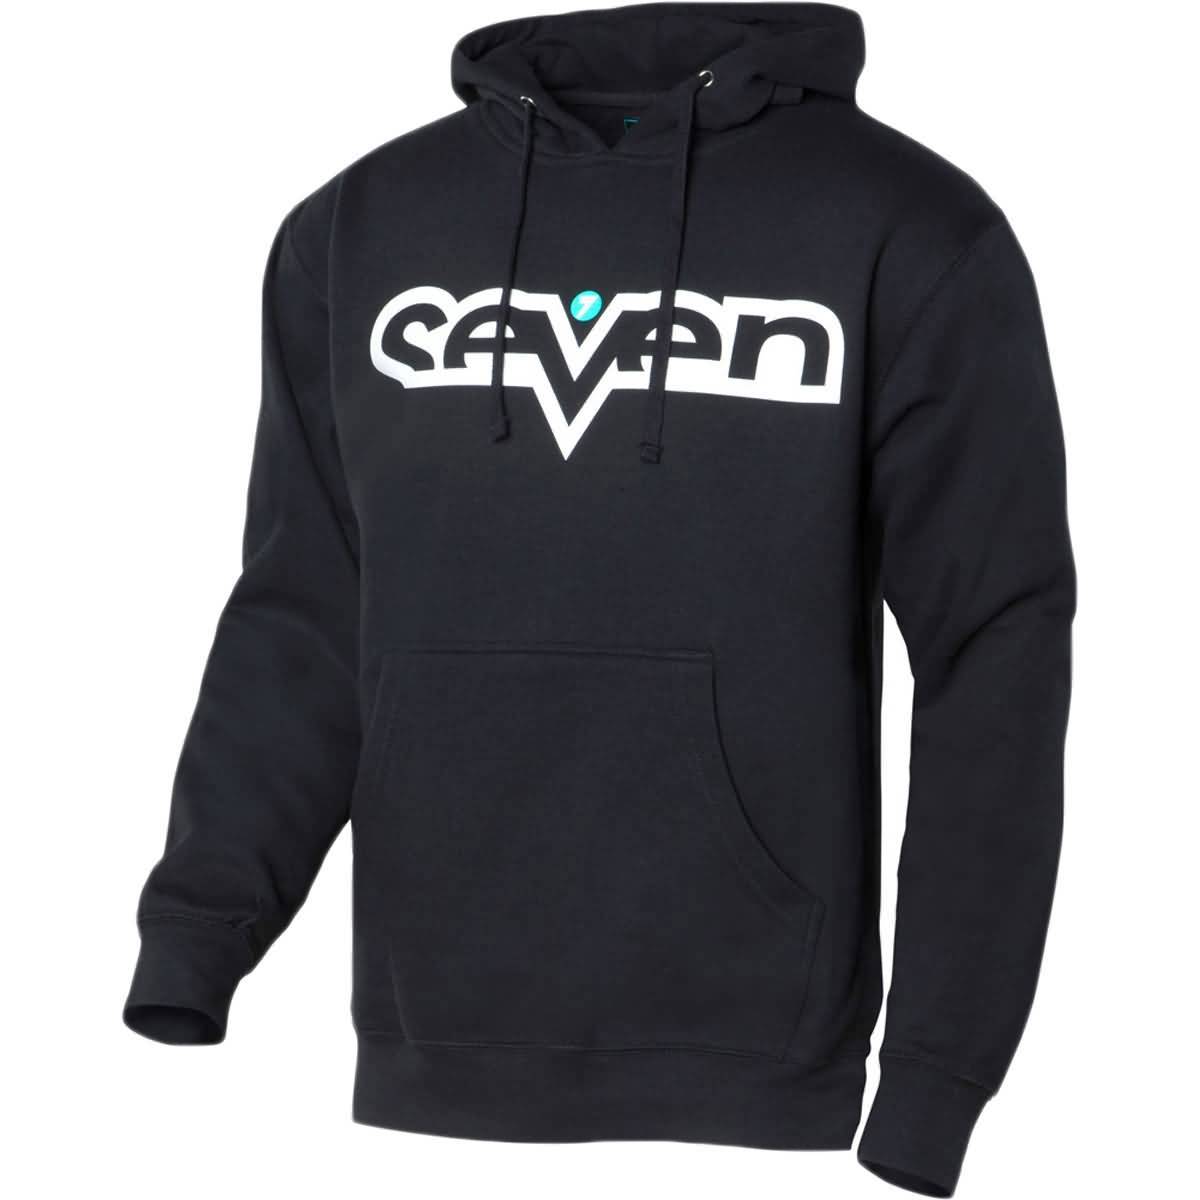 Seven Brand Youth Hoody Pullover Sweatshirts-1180005